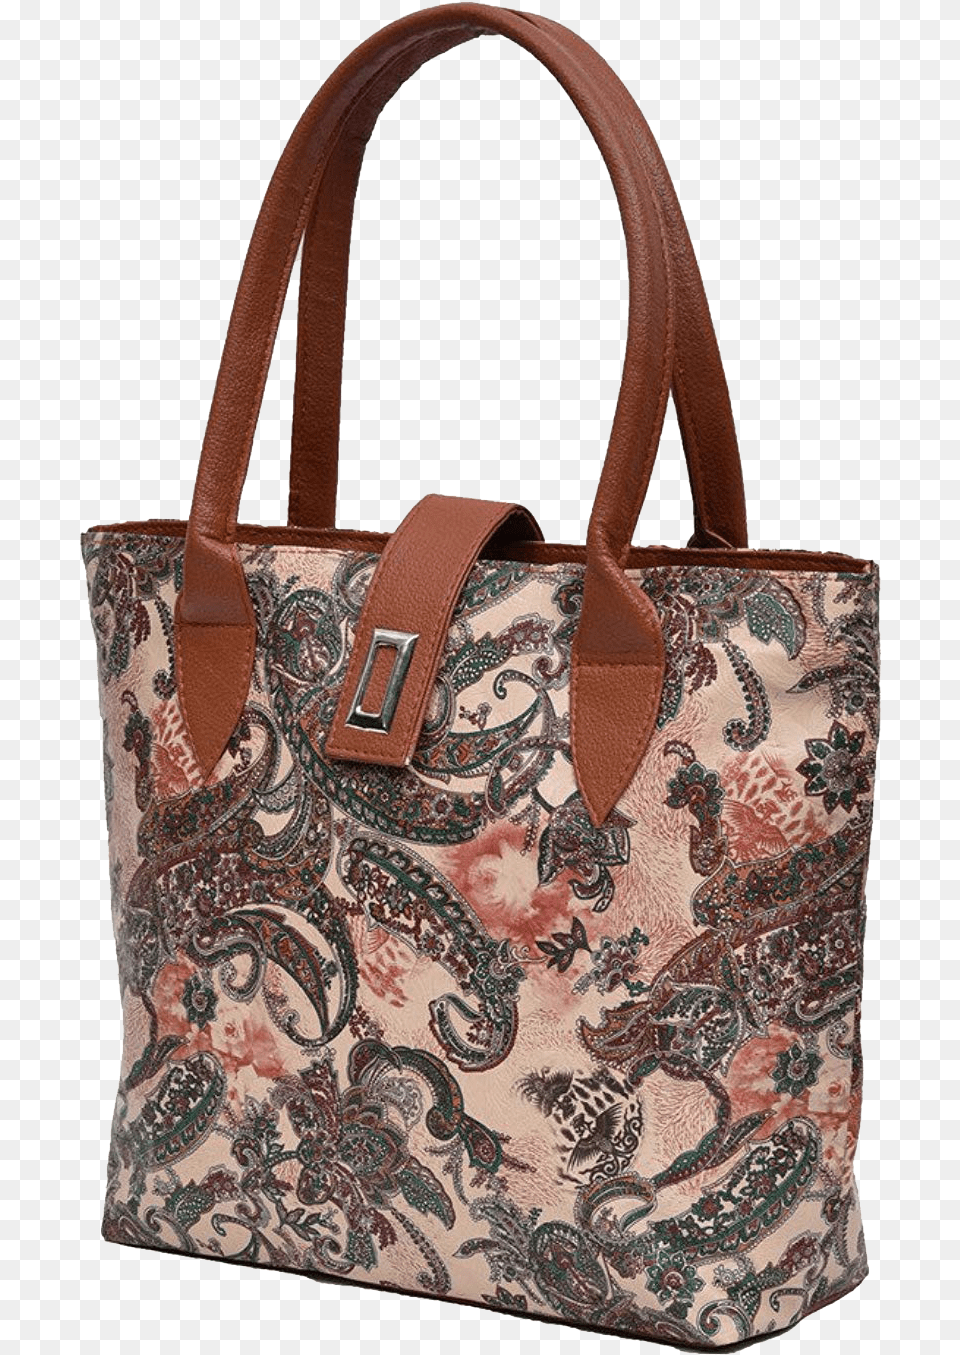 Ladies Bags Background Tote Bag, Accessories, Handbag, Purse, Tote Bag Png Image